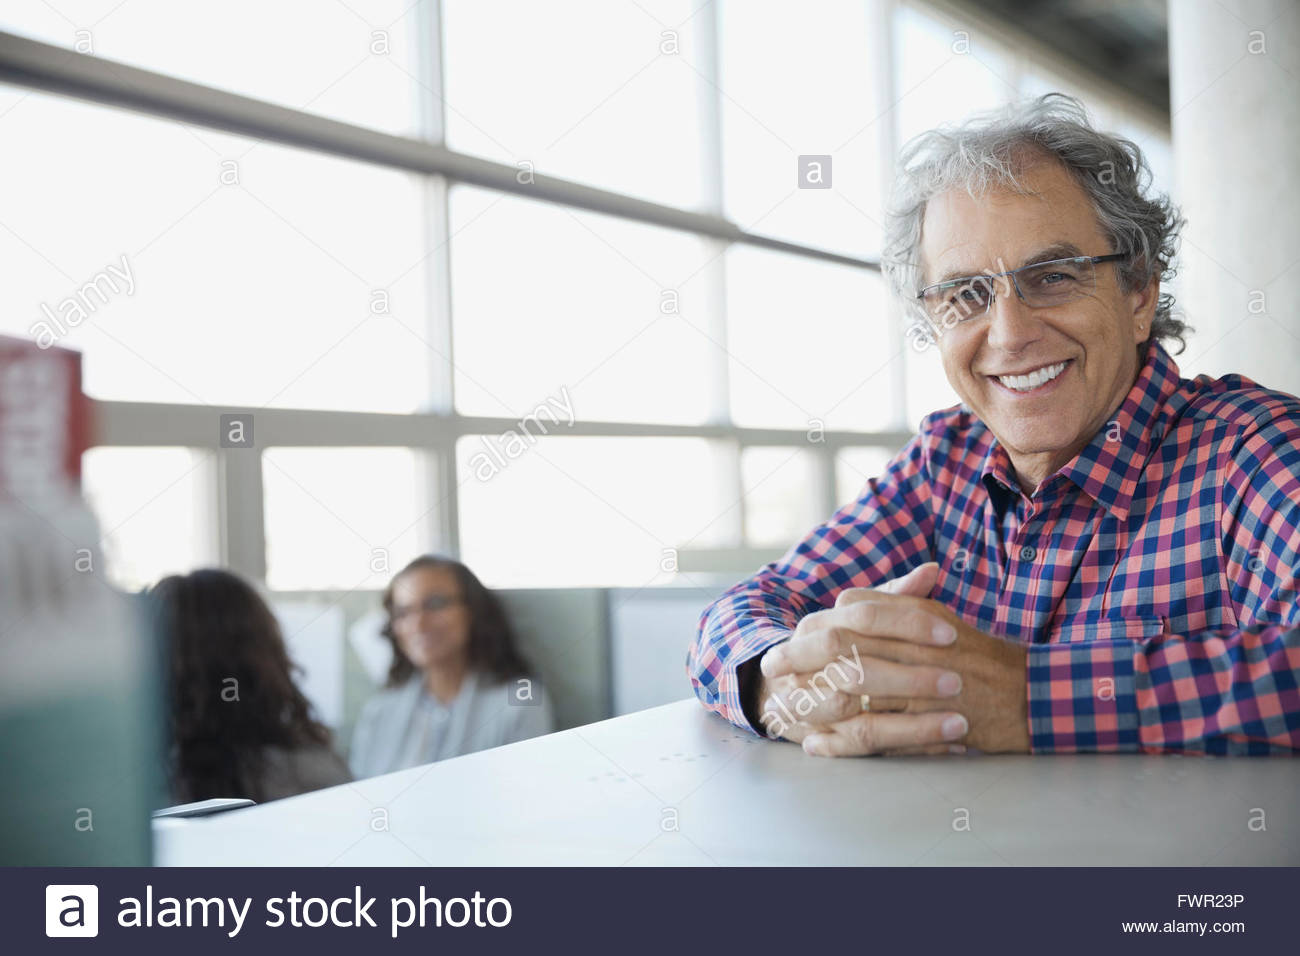 Portrait of businessman smiling in office Banque D'Images